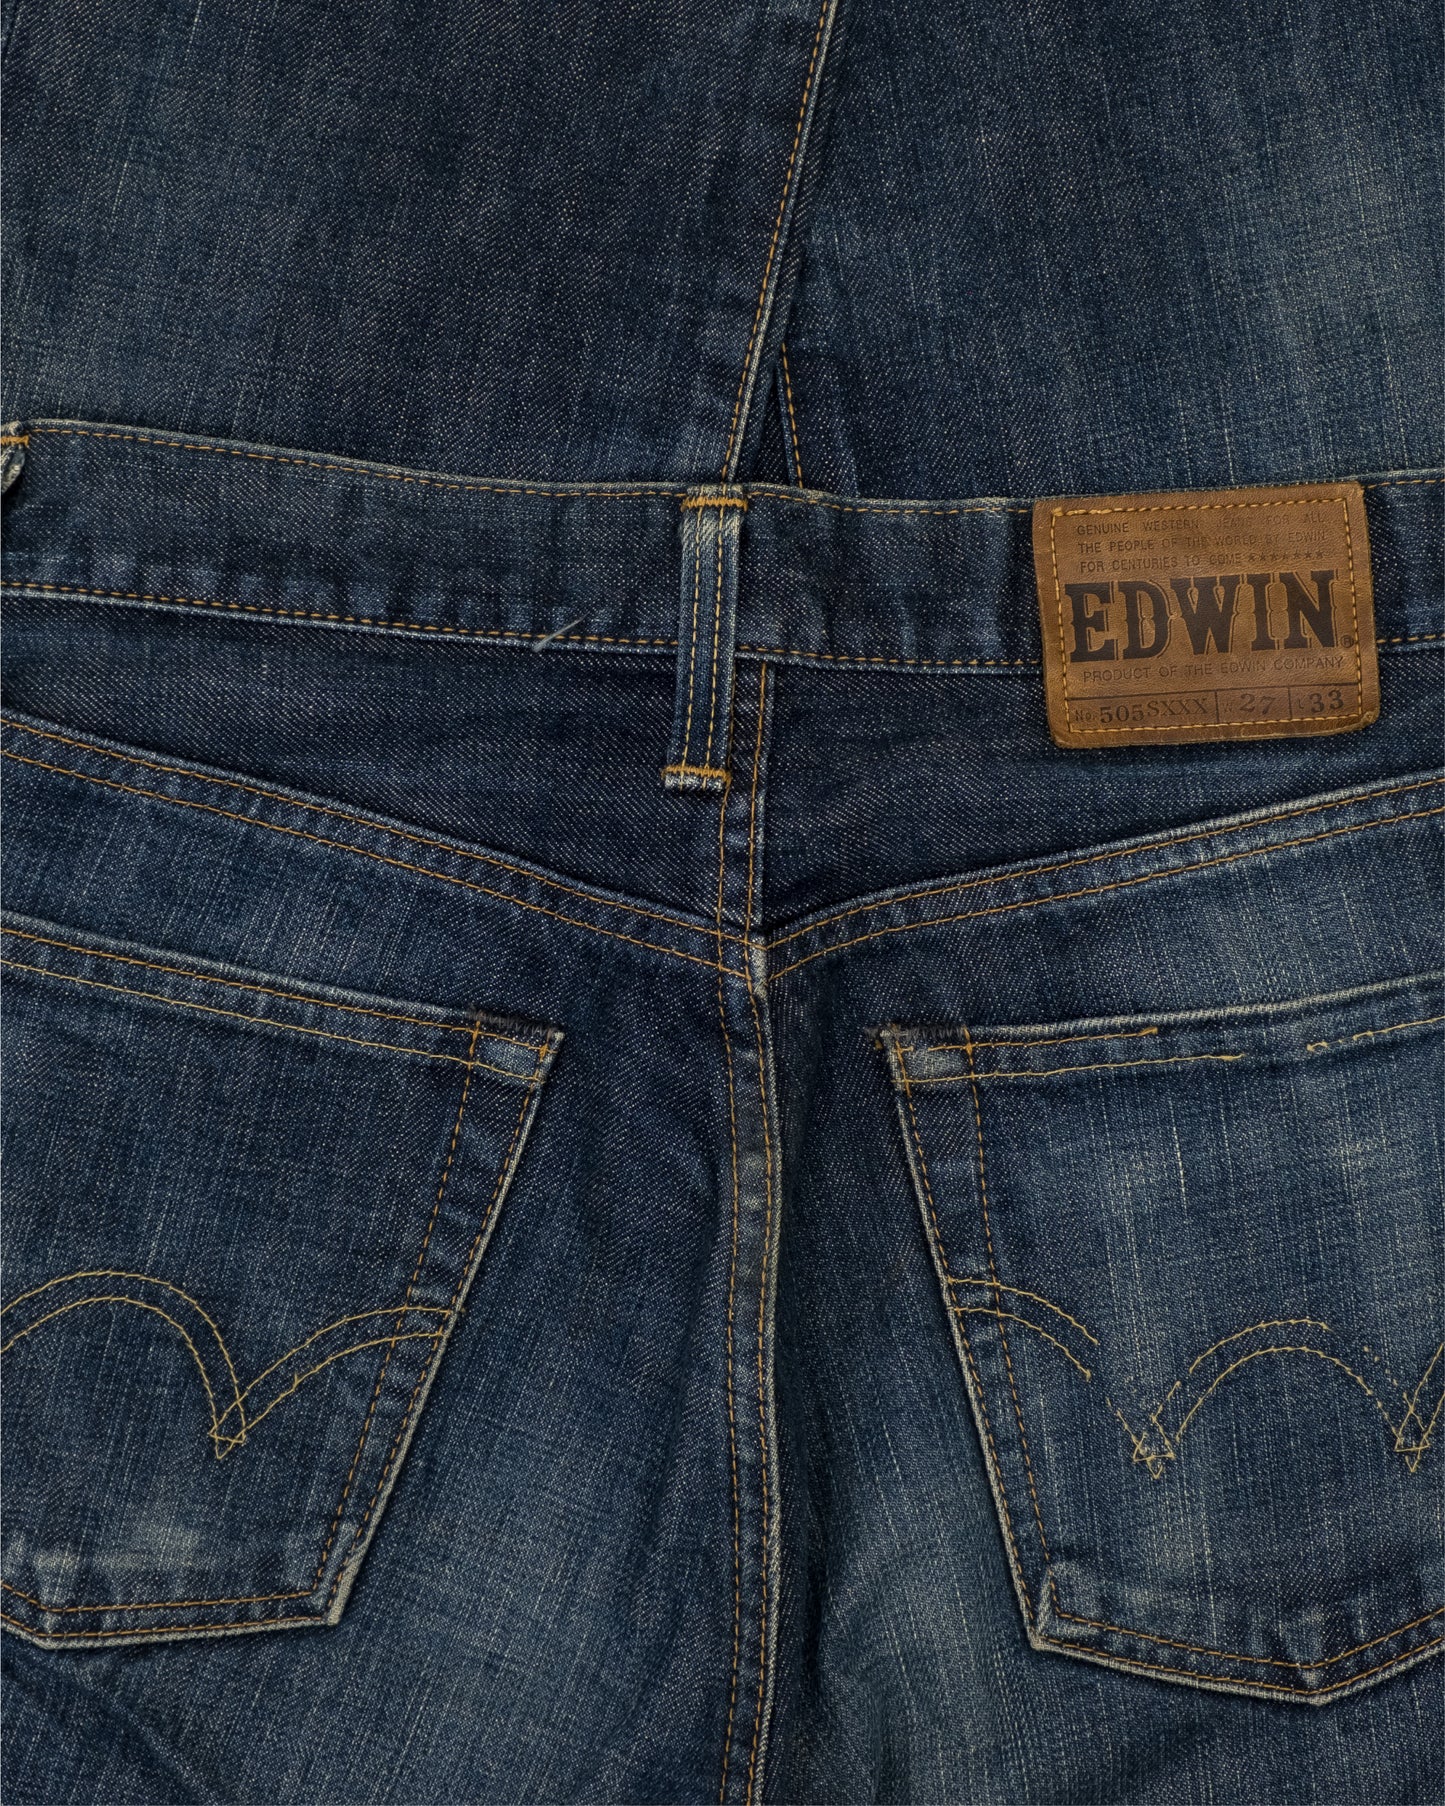 Edwin 505SXXX Selvedge Denim Jeans